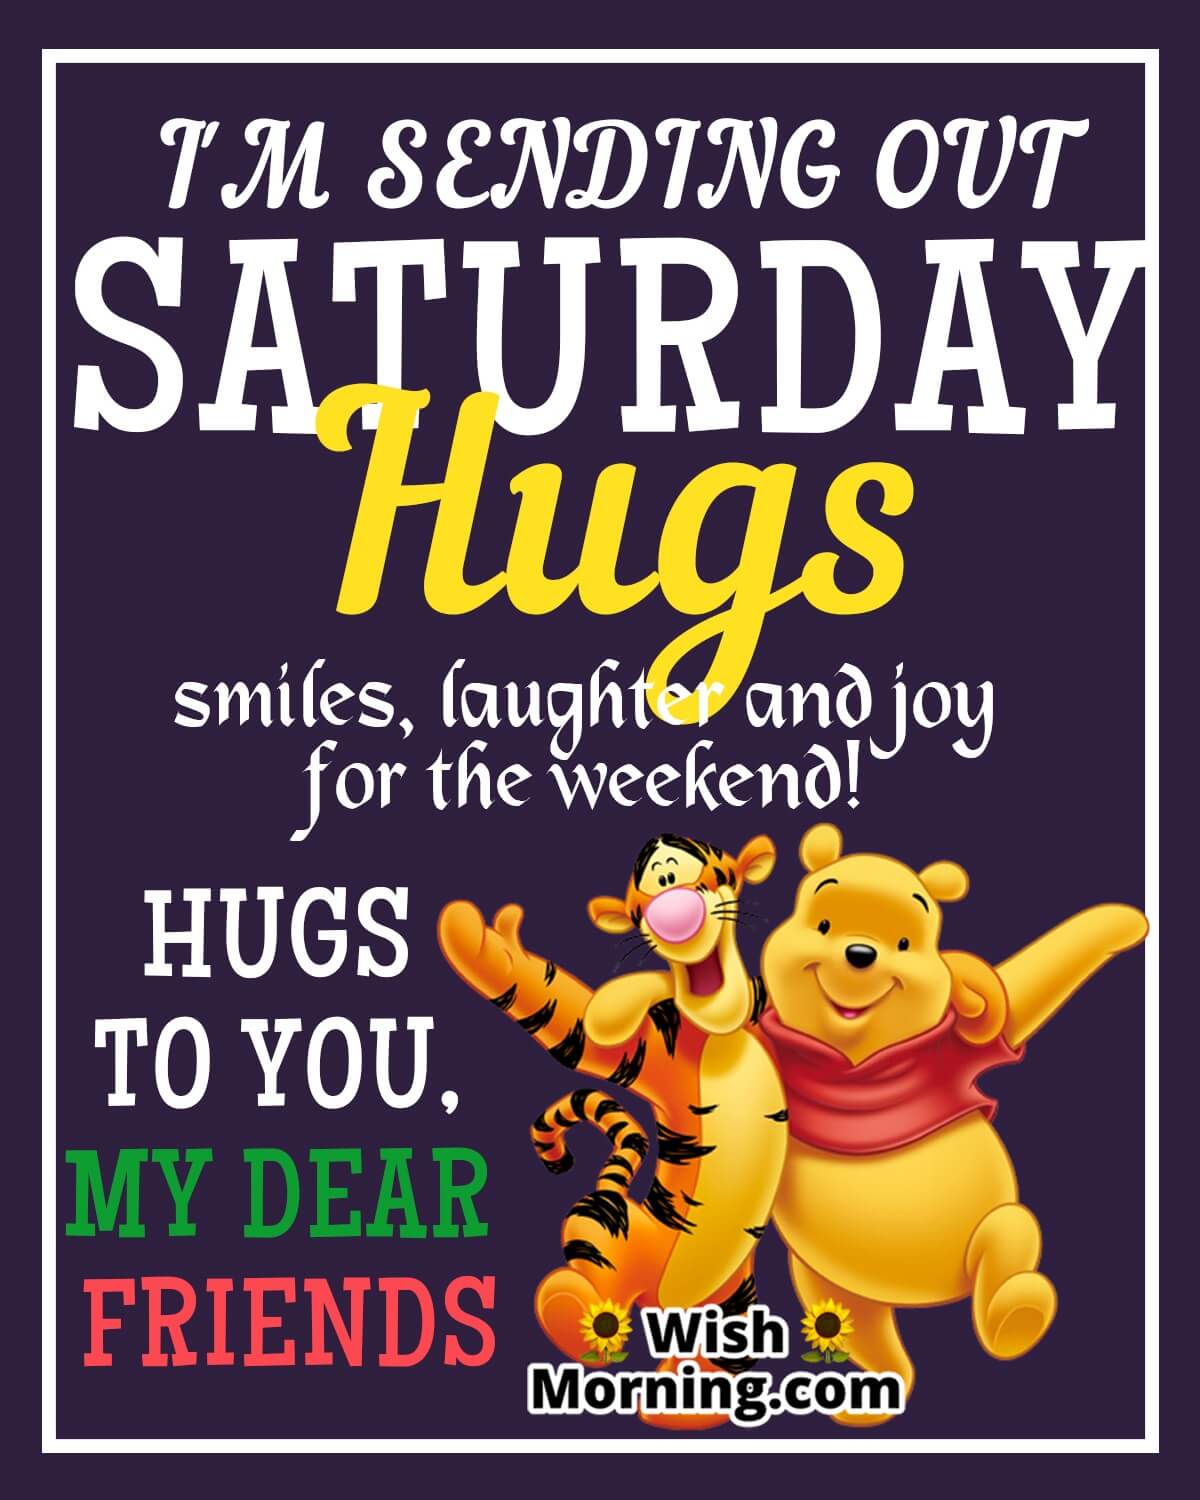 Saturday Hugs To My Dear Friends